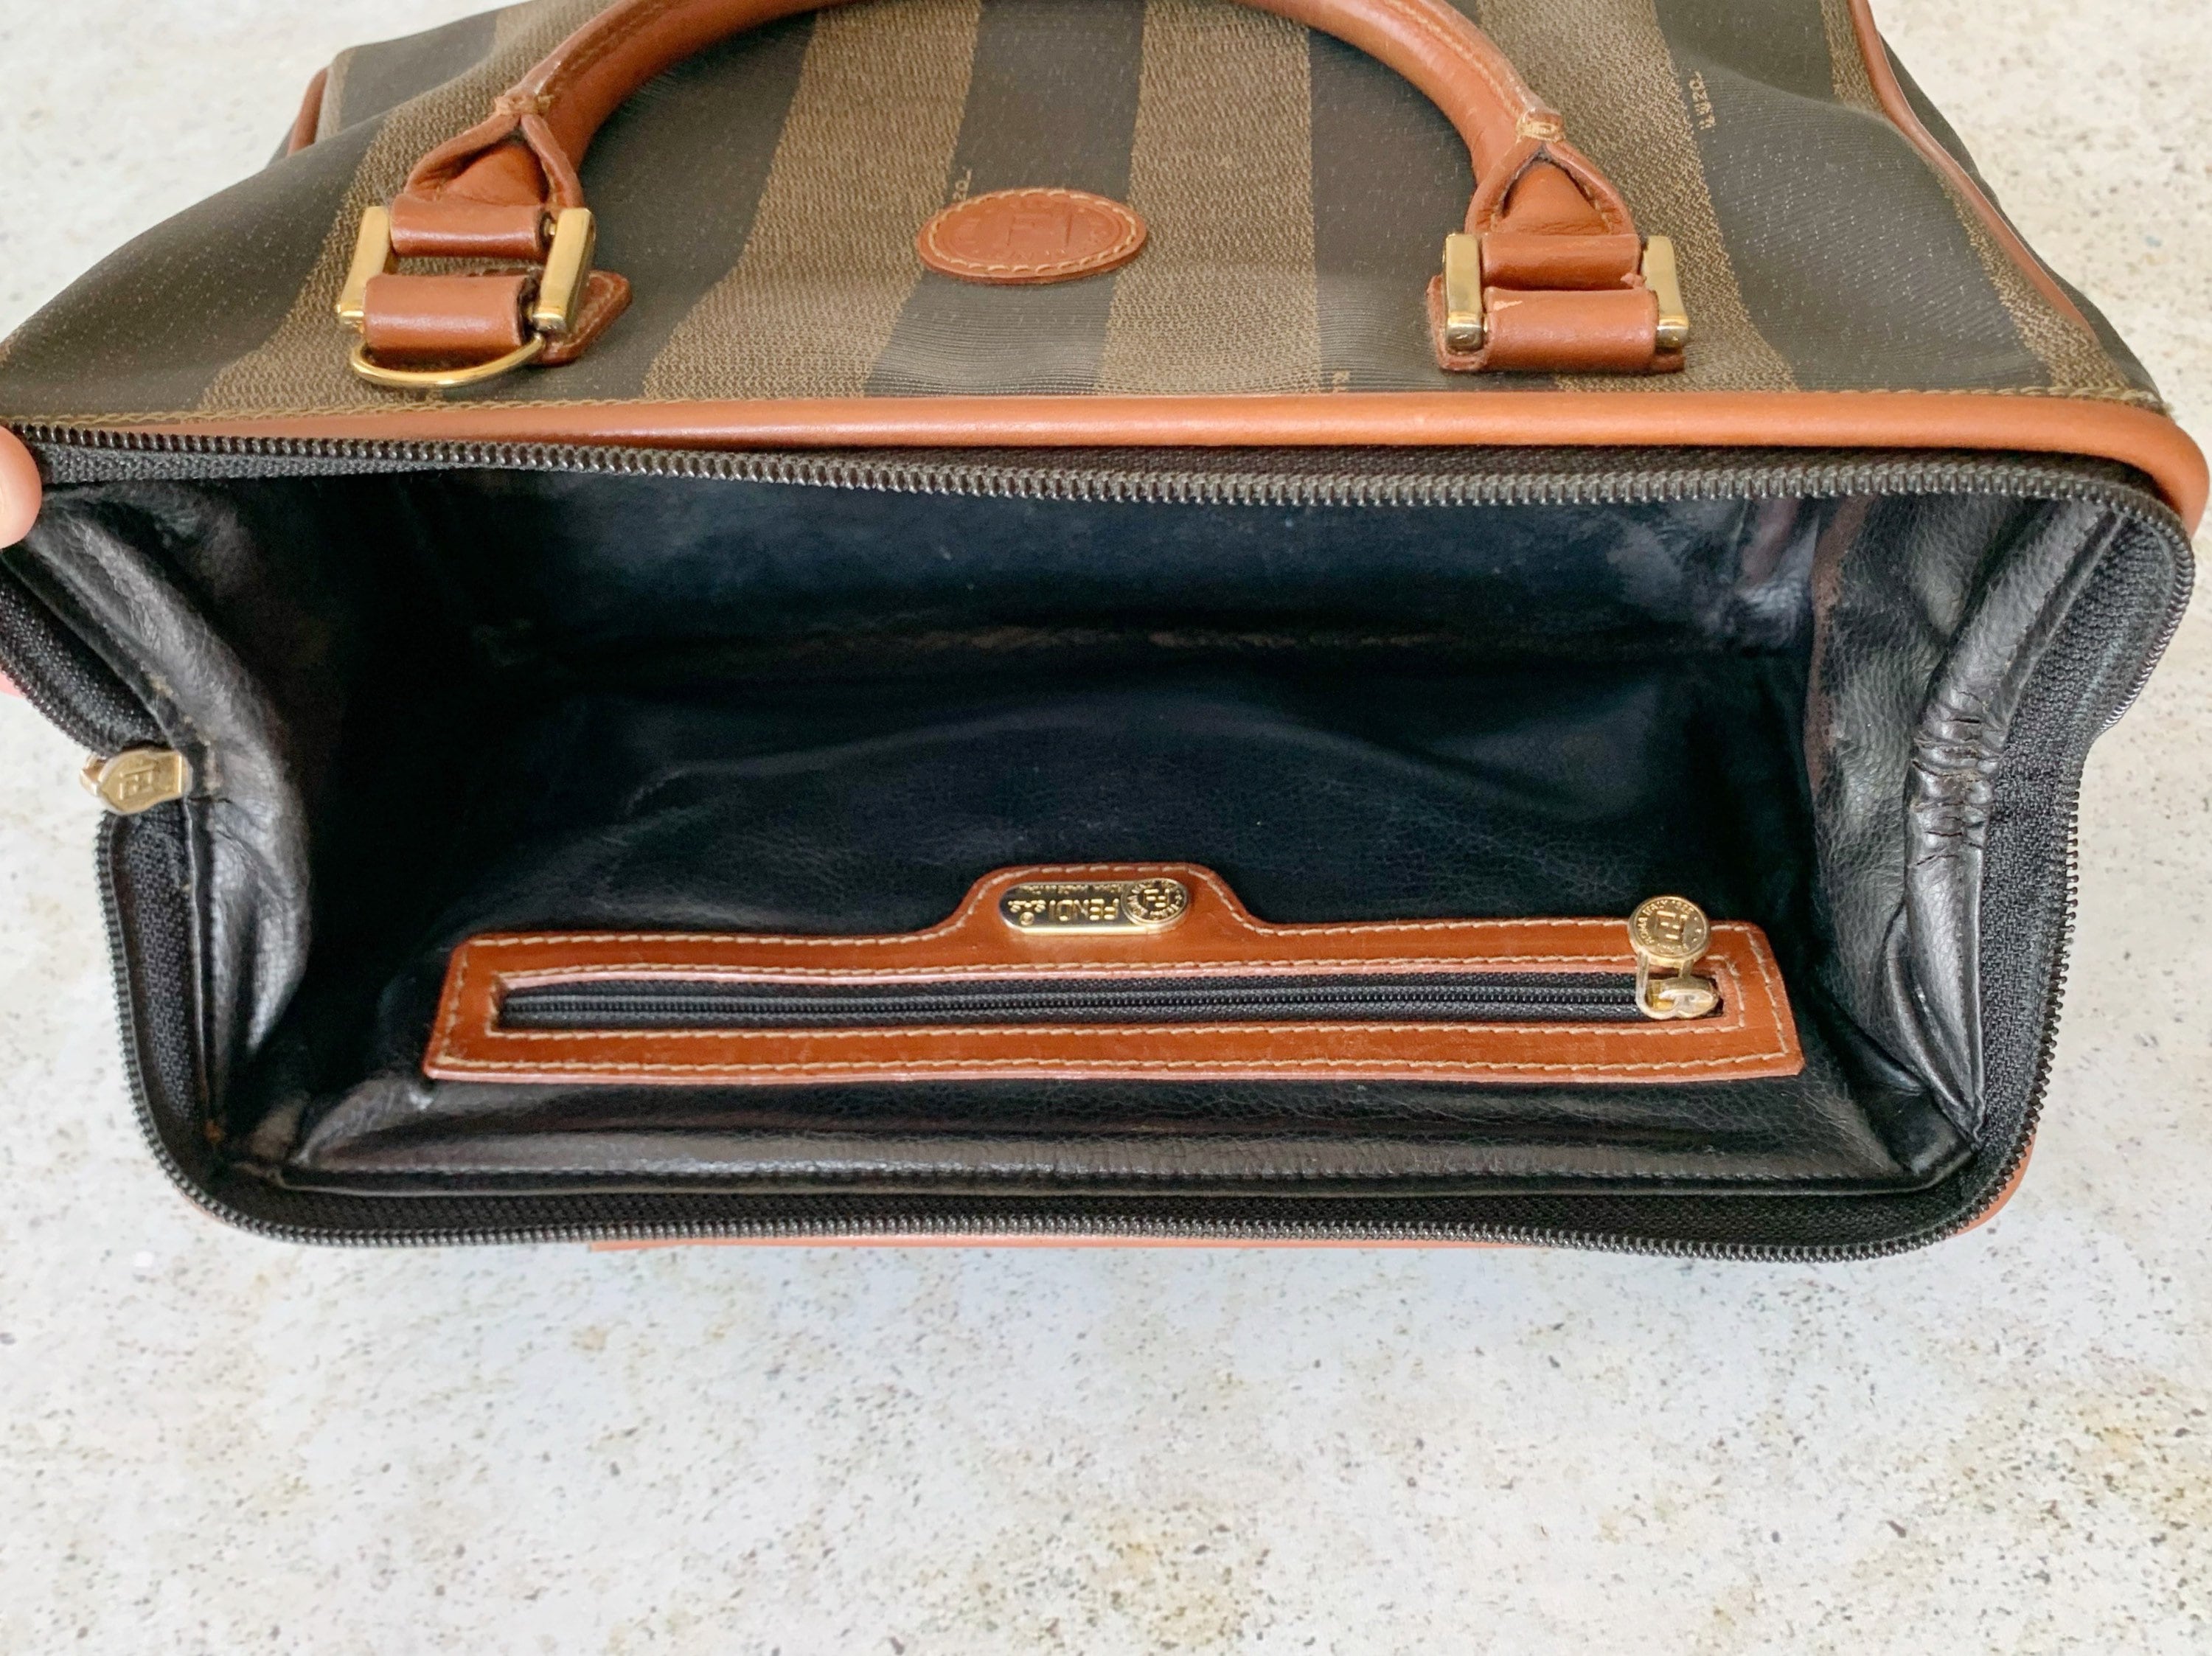 Vintage bag (doctor bag?) : r/Louisvuitton